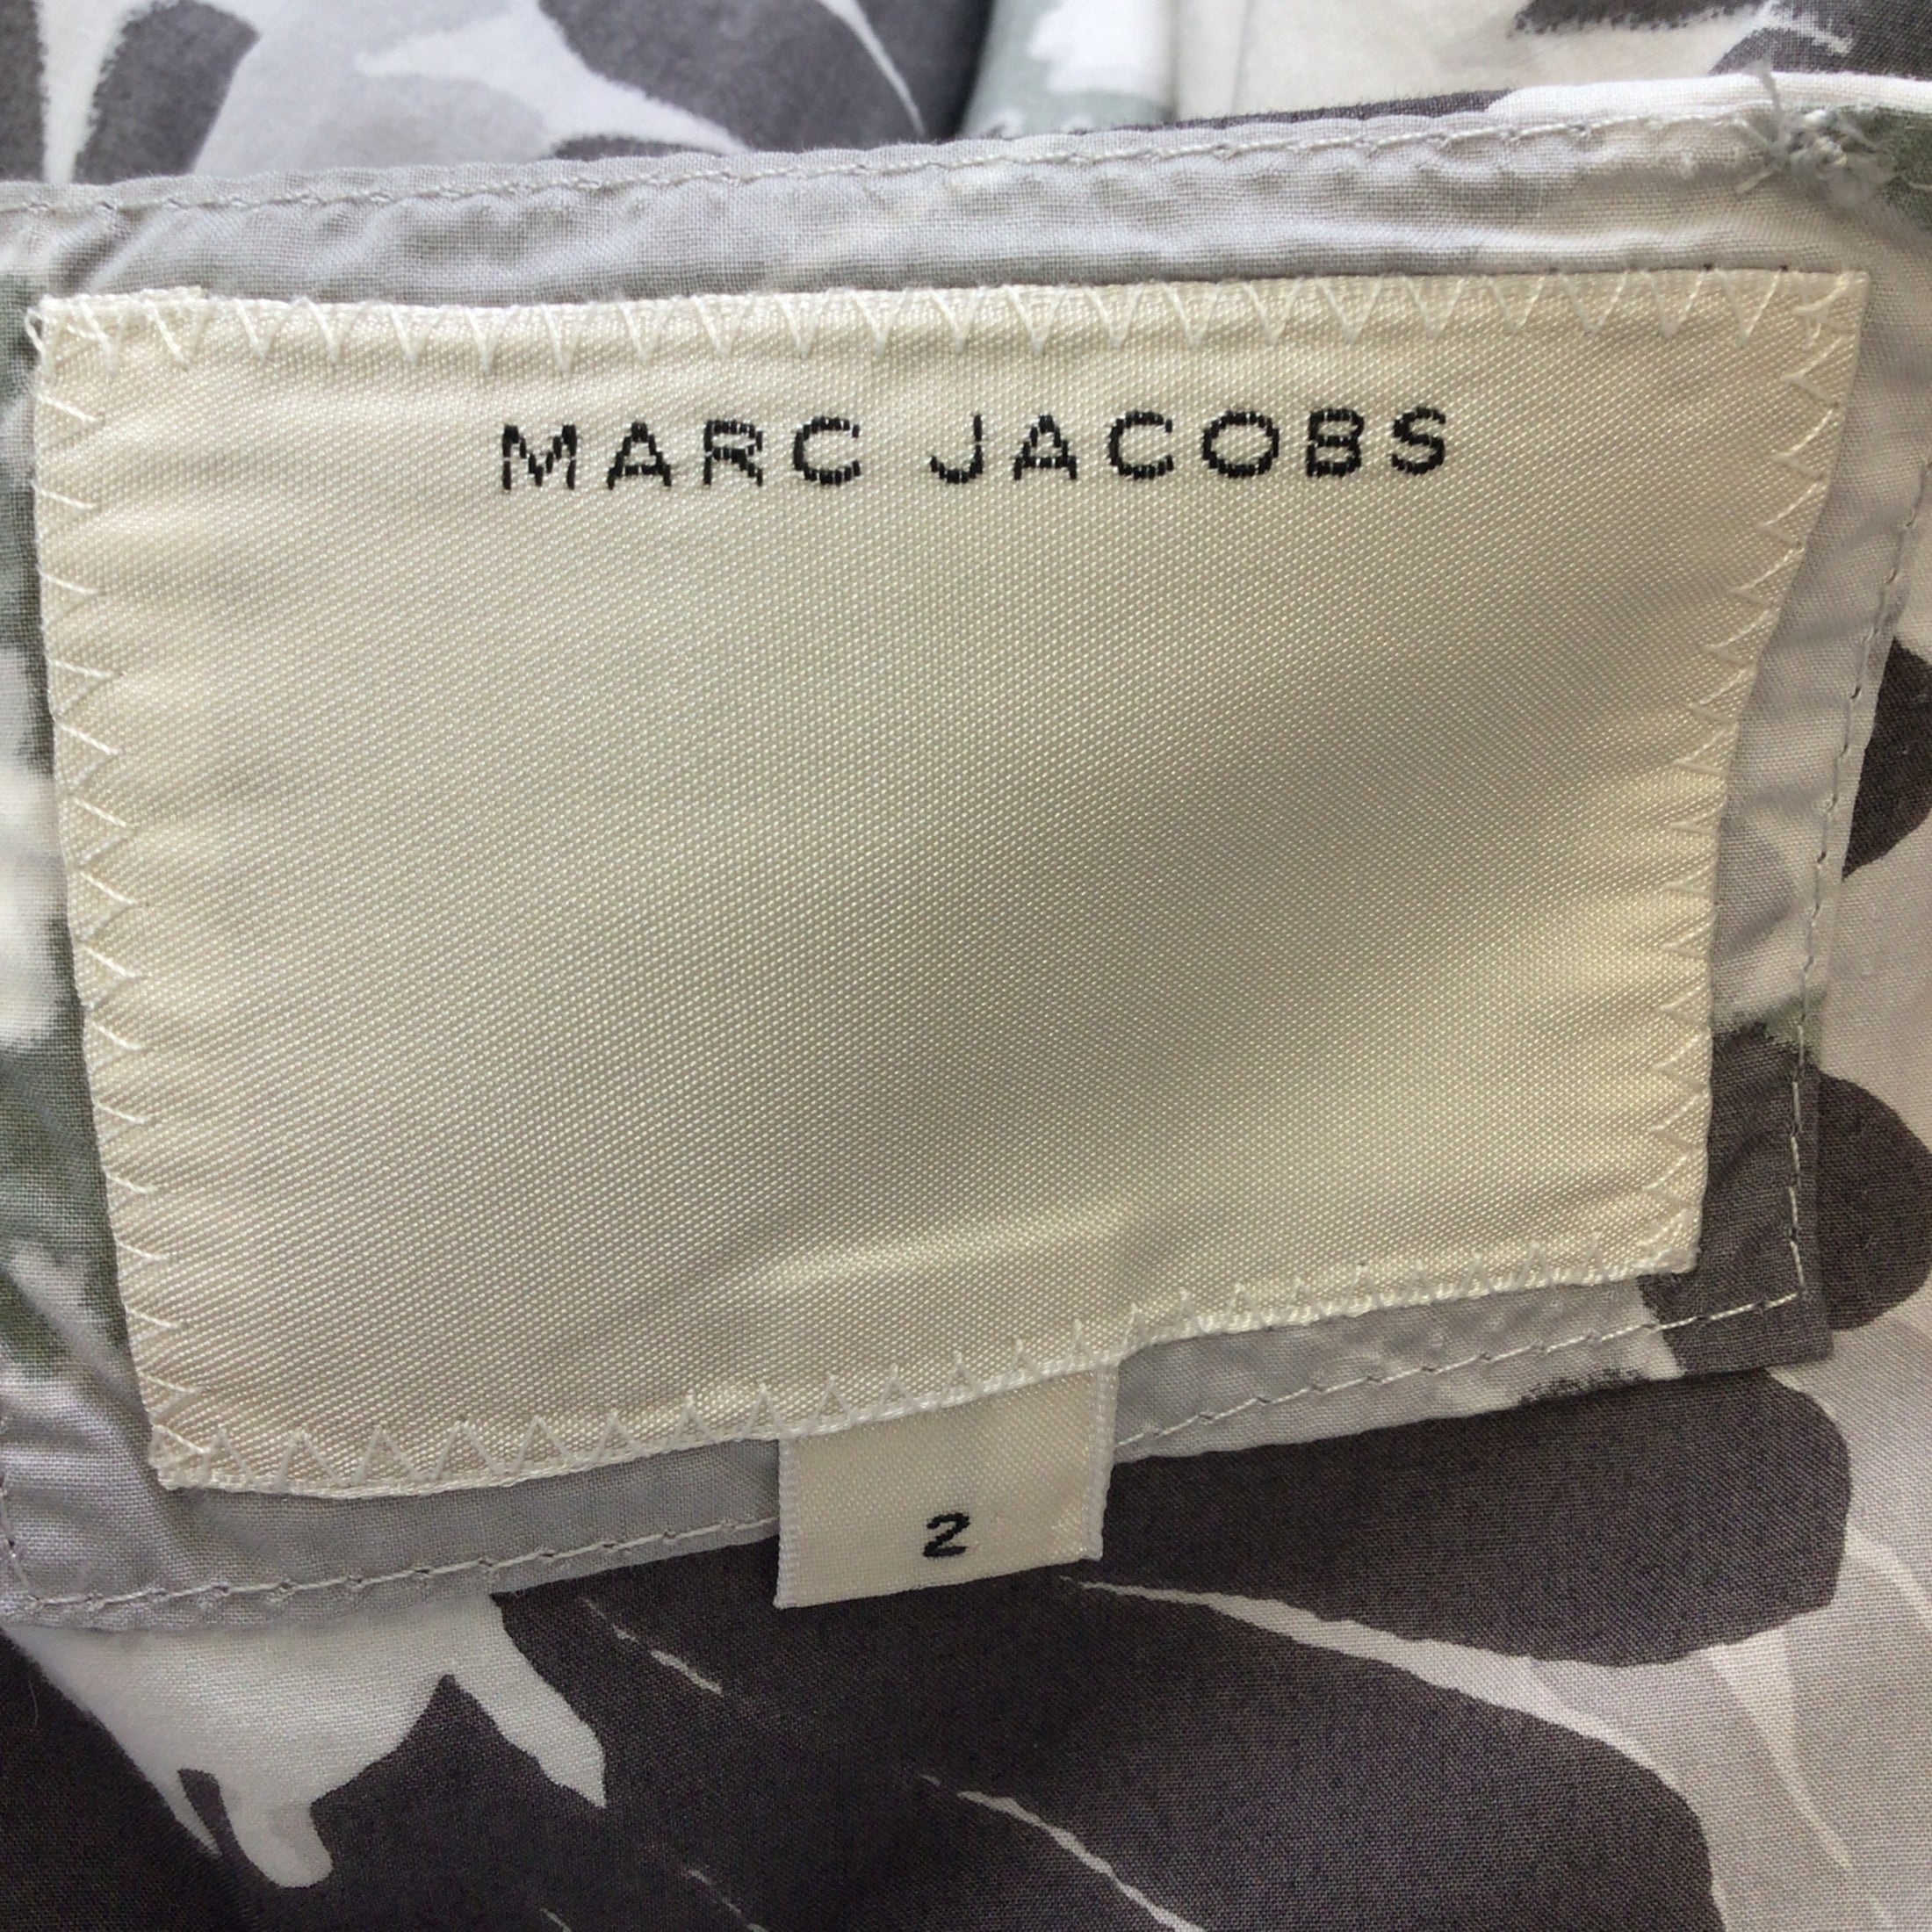 Marc Jacobs White / Grey Multi Floral Printed Sleeveless Cotton Dress